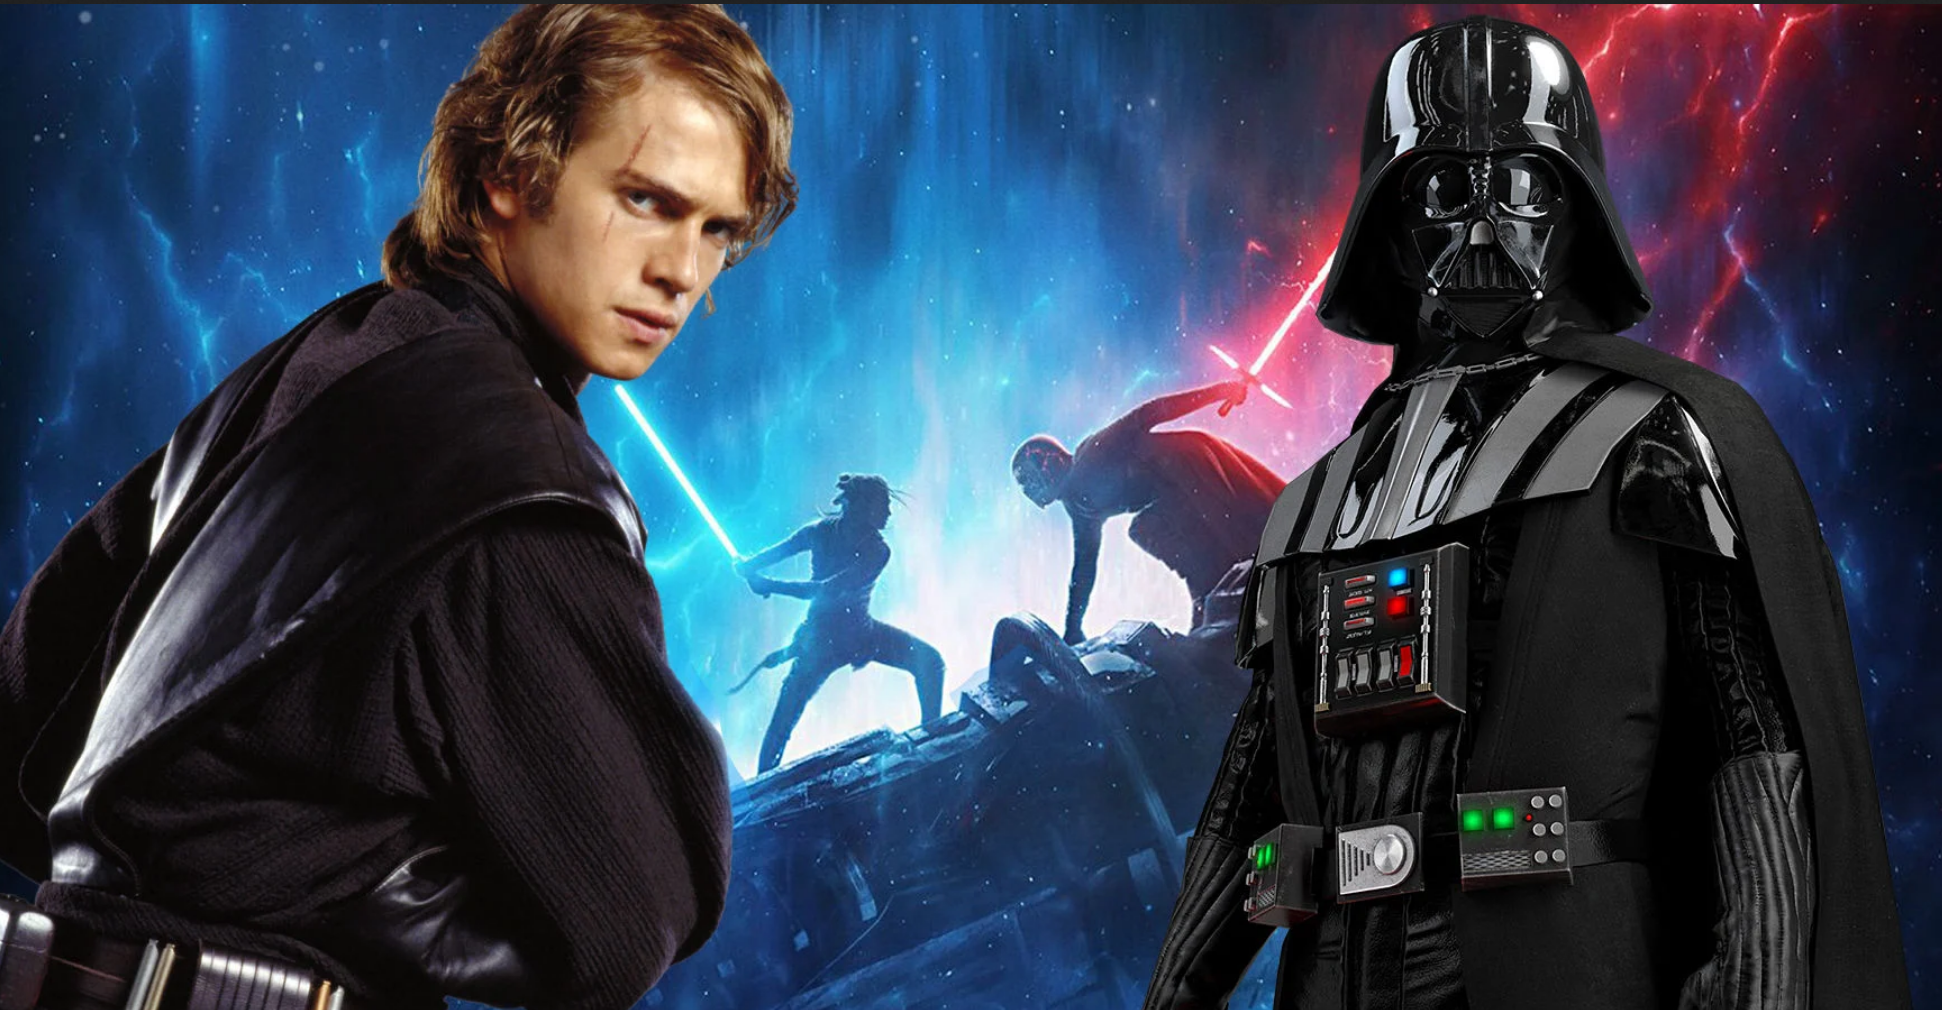 Image of Hayden-Christensen and Darth Vader|hayden-christensen-sand||Image of Hayden Christensen in Star Wars|Force Ghosts